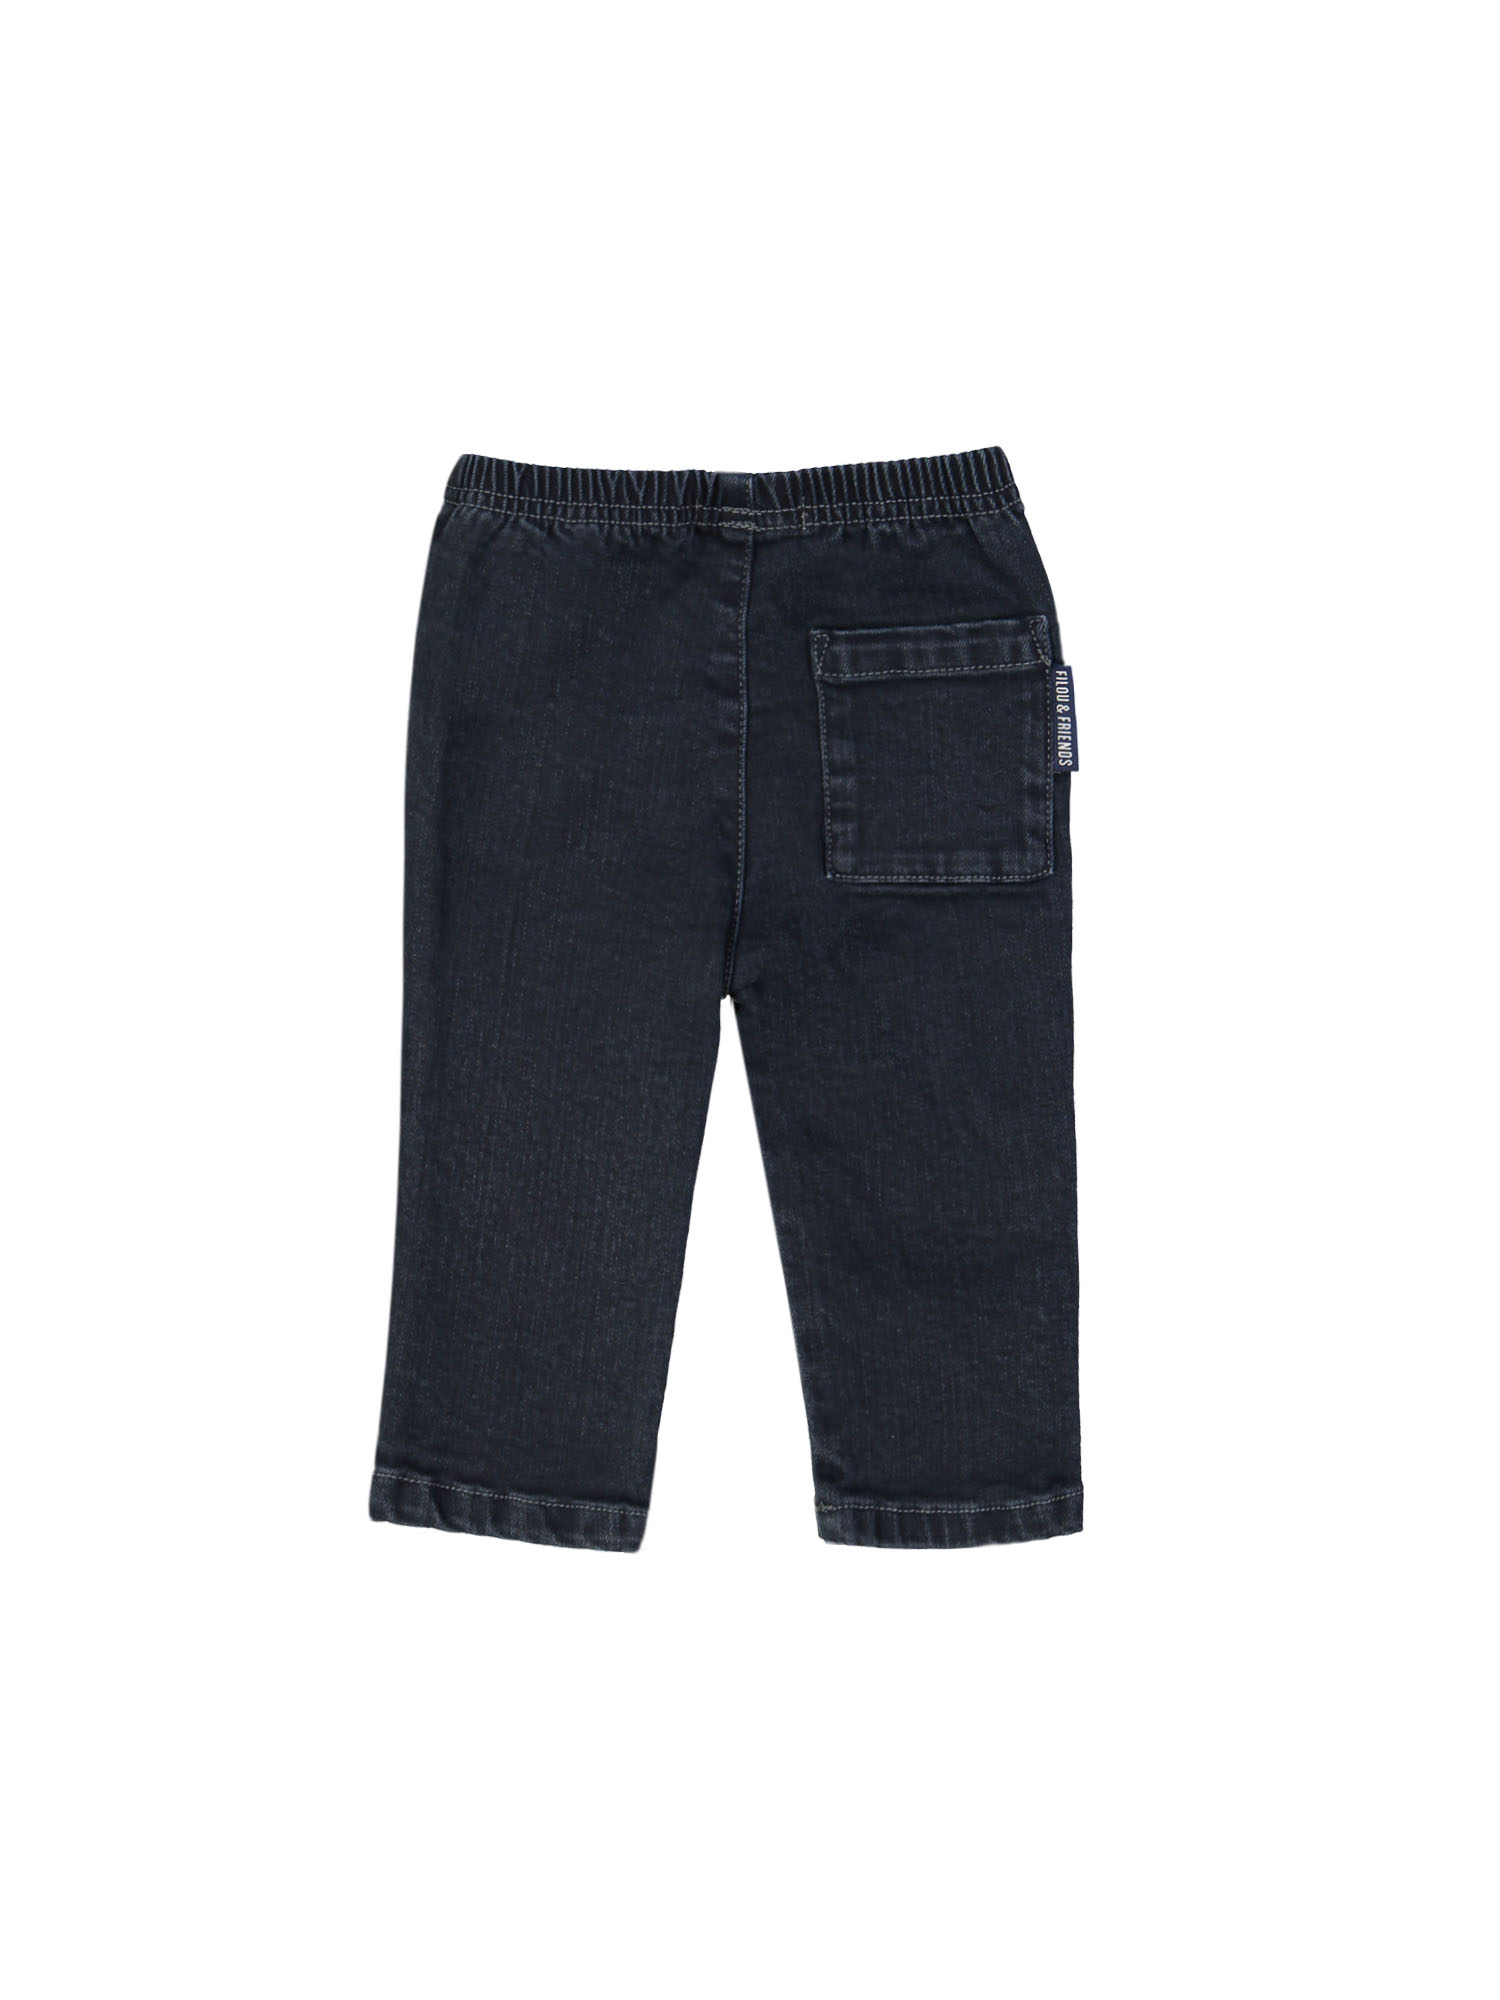 comfy broek mini jeans contrast blauw blauw 06m